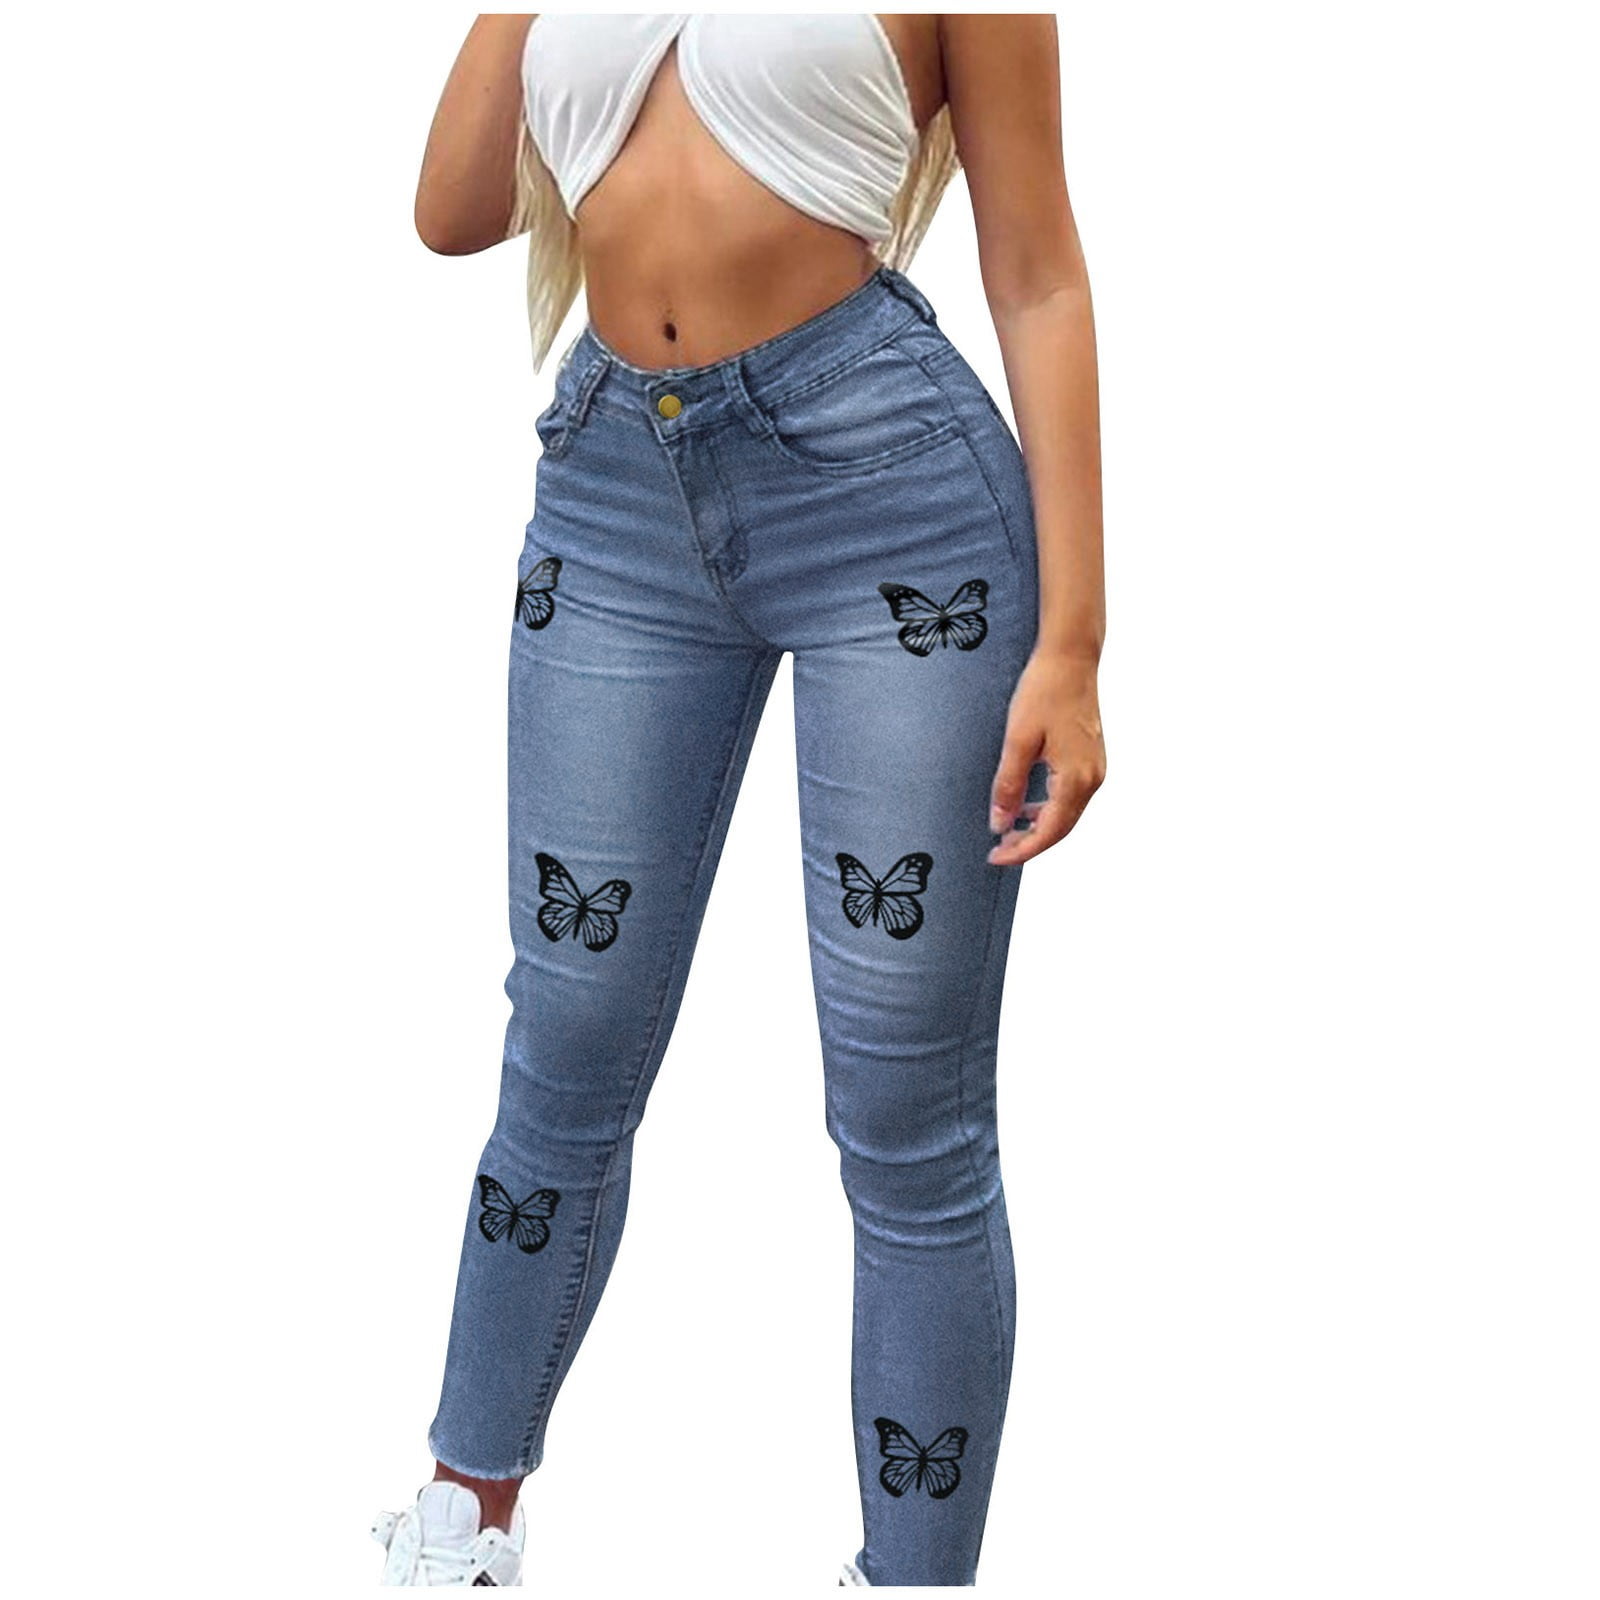 Ribbon Design Ripped Jeans Girls Fashion Denim Pants | Denim pants fashion, Girls  jeans, Kids jeans girls